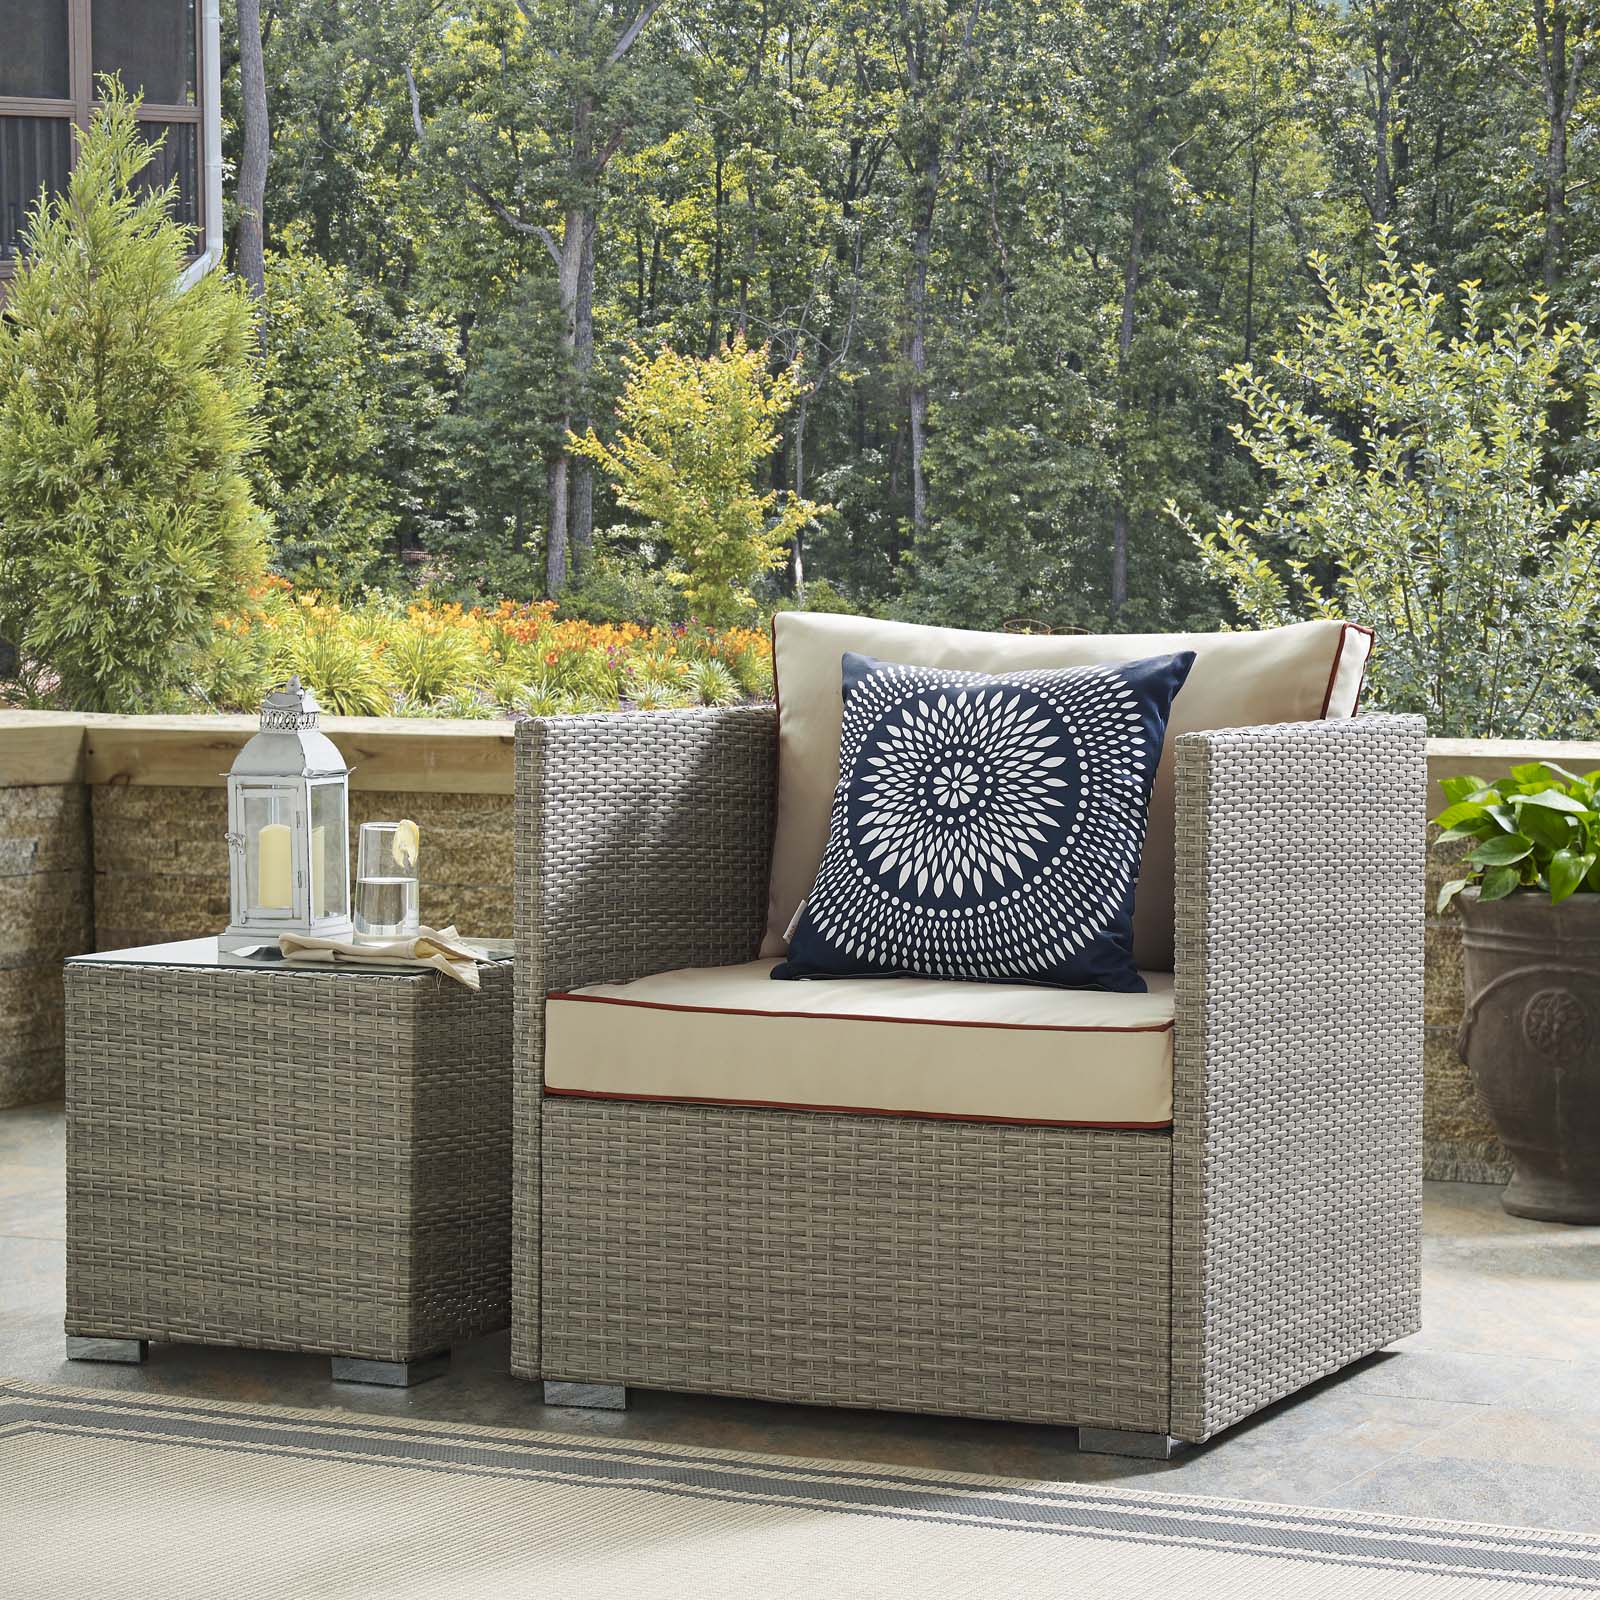 Modern Contemporary Urban Design Outdoor Patio Balcony Garden Furniture Lounge Chair Armchair, Sunbrella Rattan Wicker, Light Gray Beige - image 2 of 4